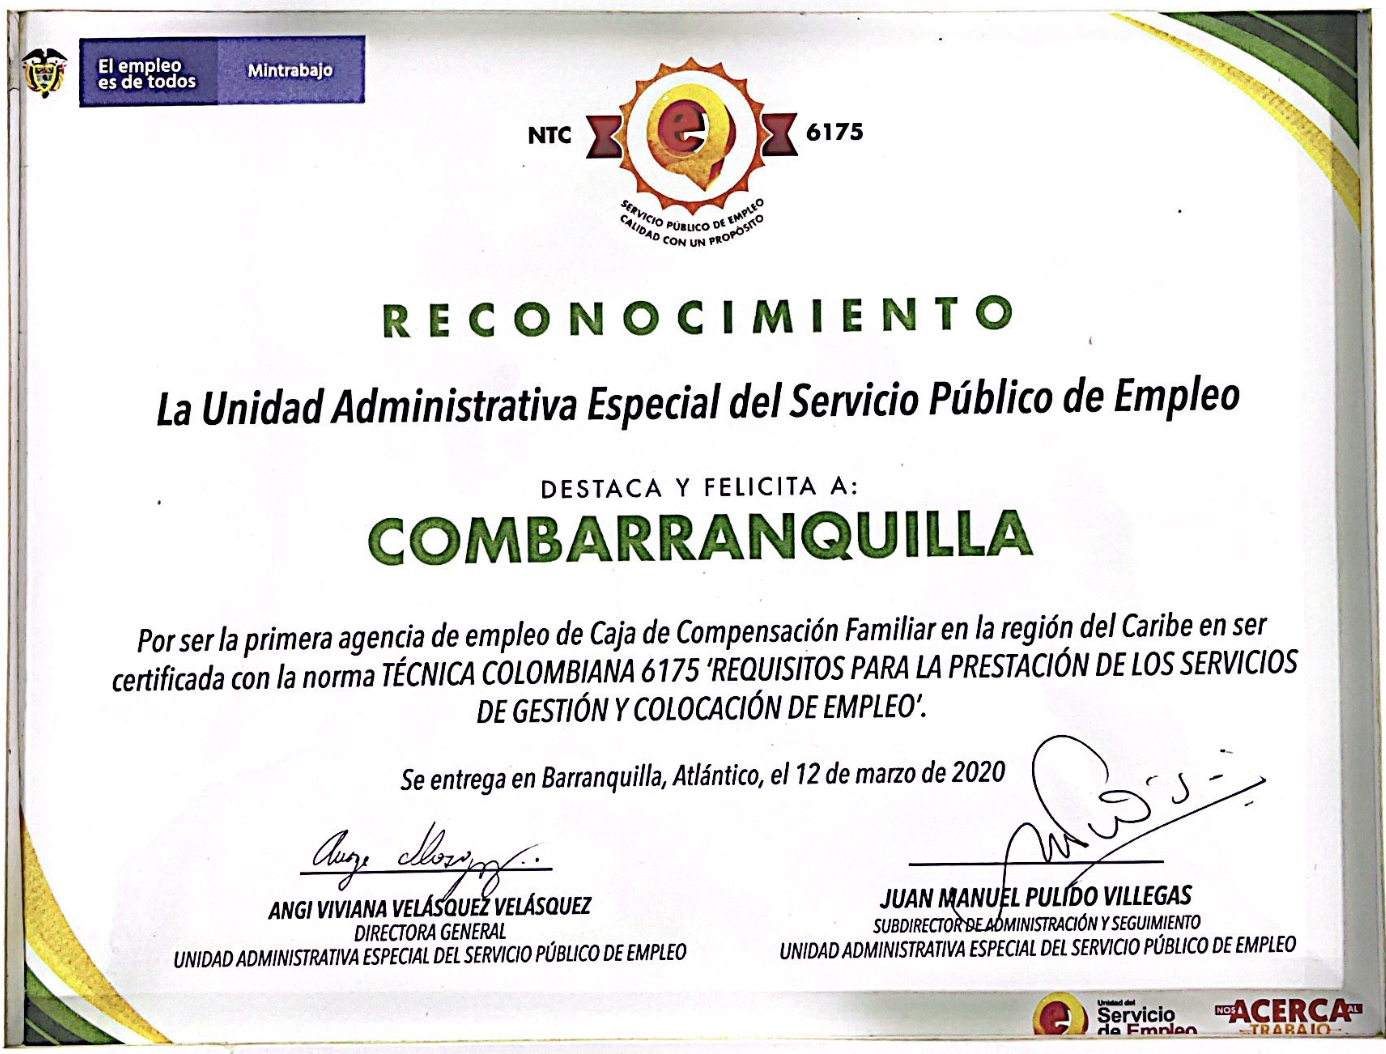 CERTIFICACIÓN DE LA NORMA TÉCNICA COLOMBIANA NTC 6175